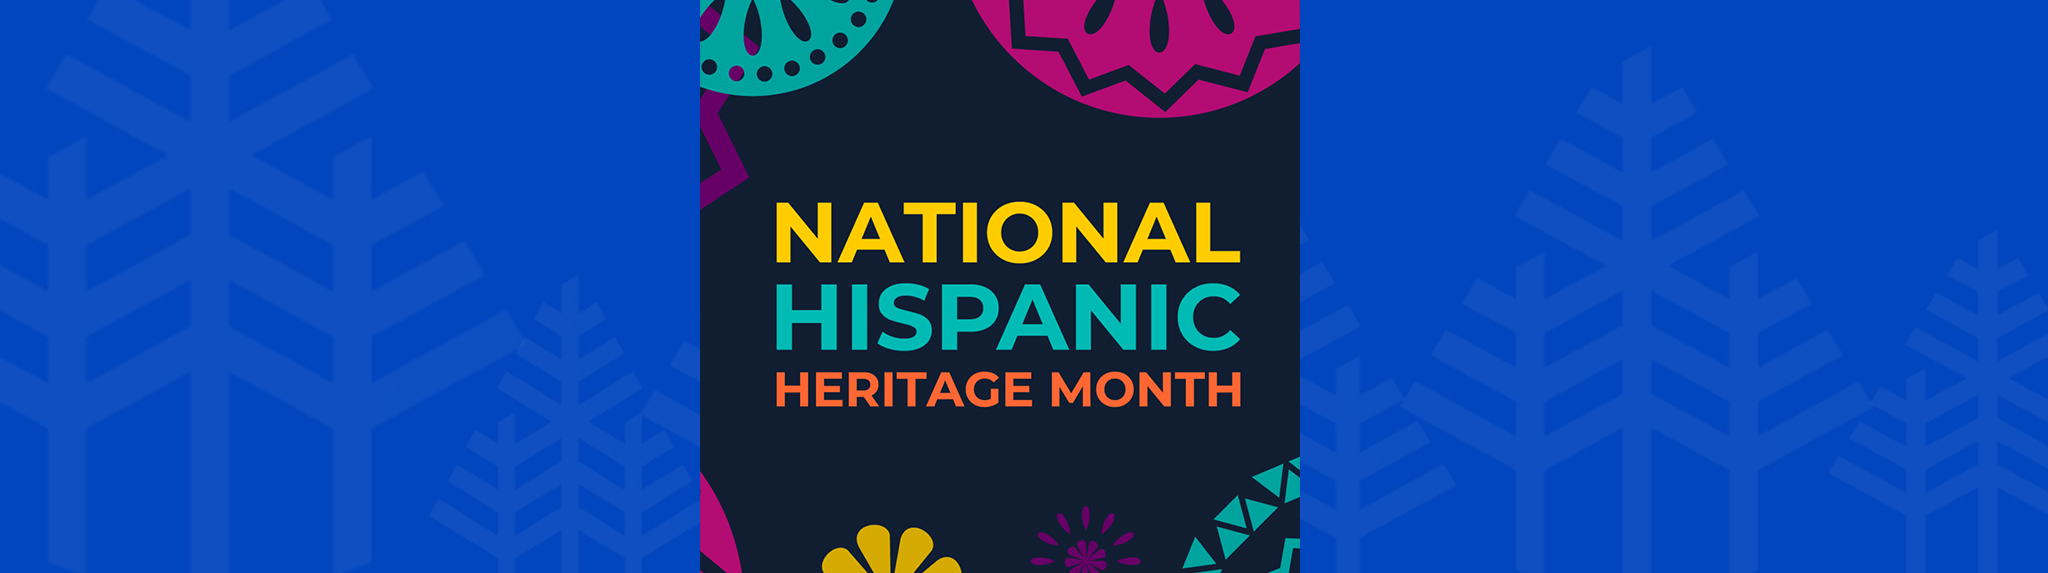 National Hispanic Heritage month